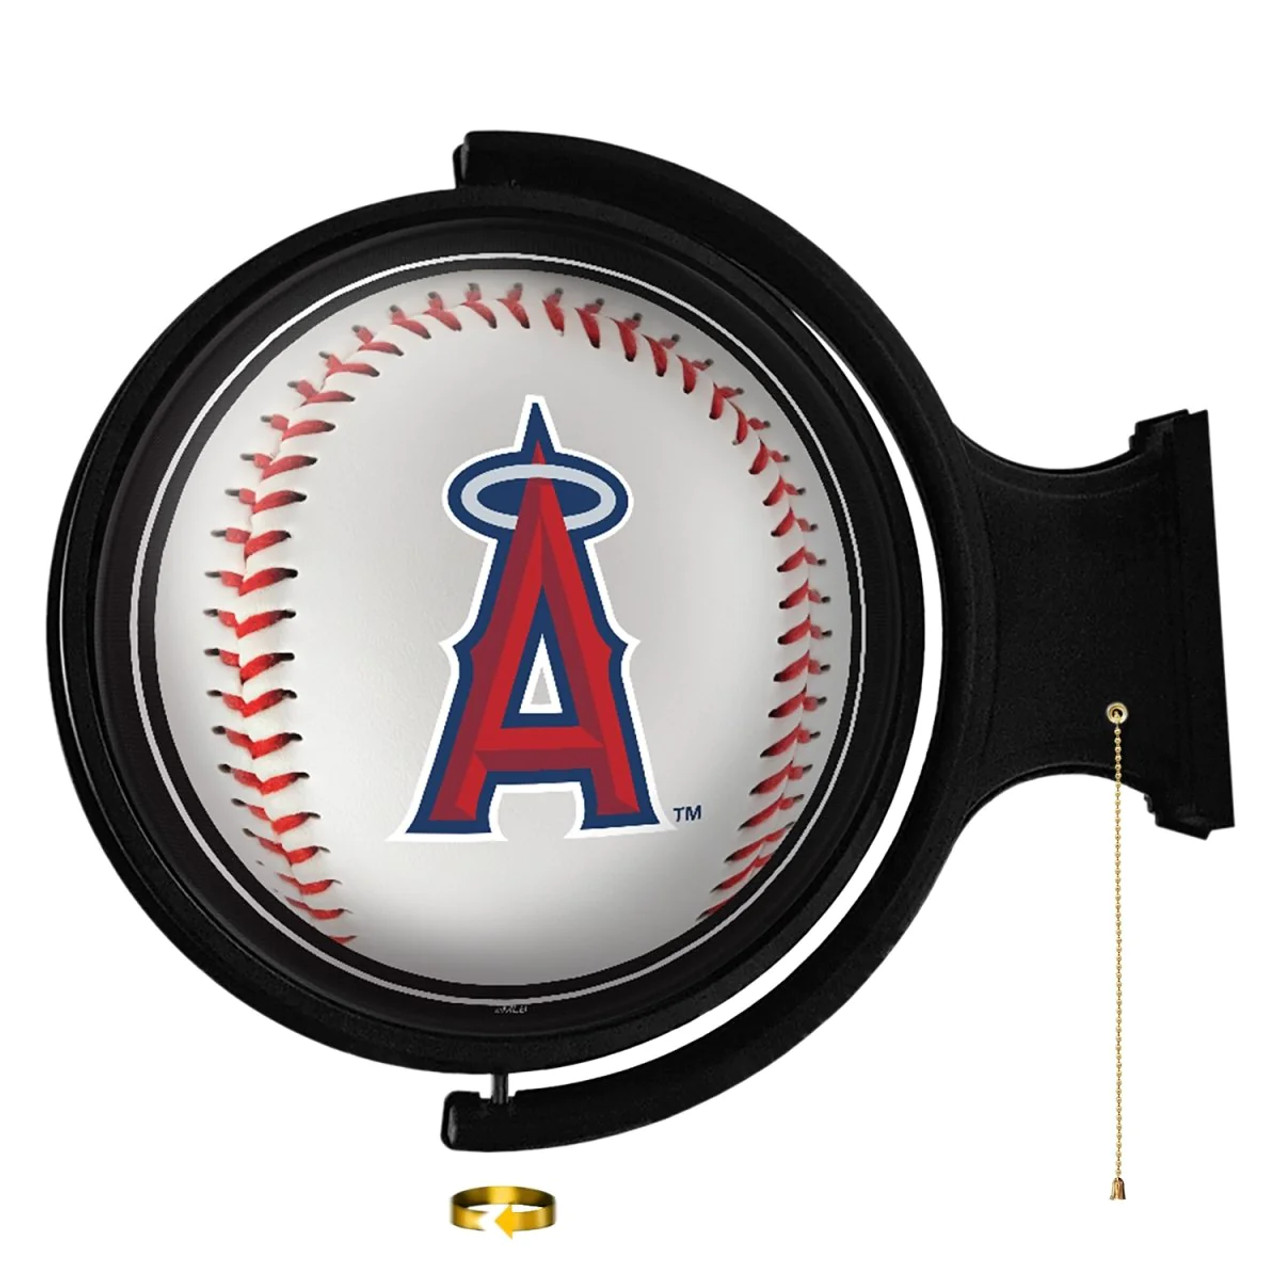 LAA, Los Angeles, Angels, Baseball, Original, Round, Rotating, Lighted, Wall, Sign, MBLAAN-115-31, The Fan-Brand, MLB, 704384951094